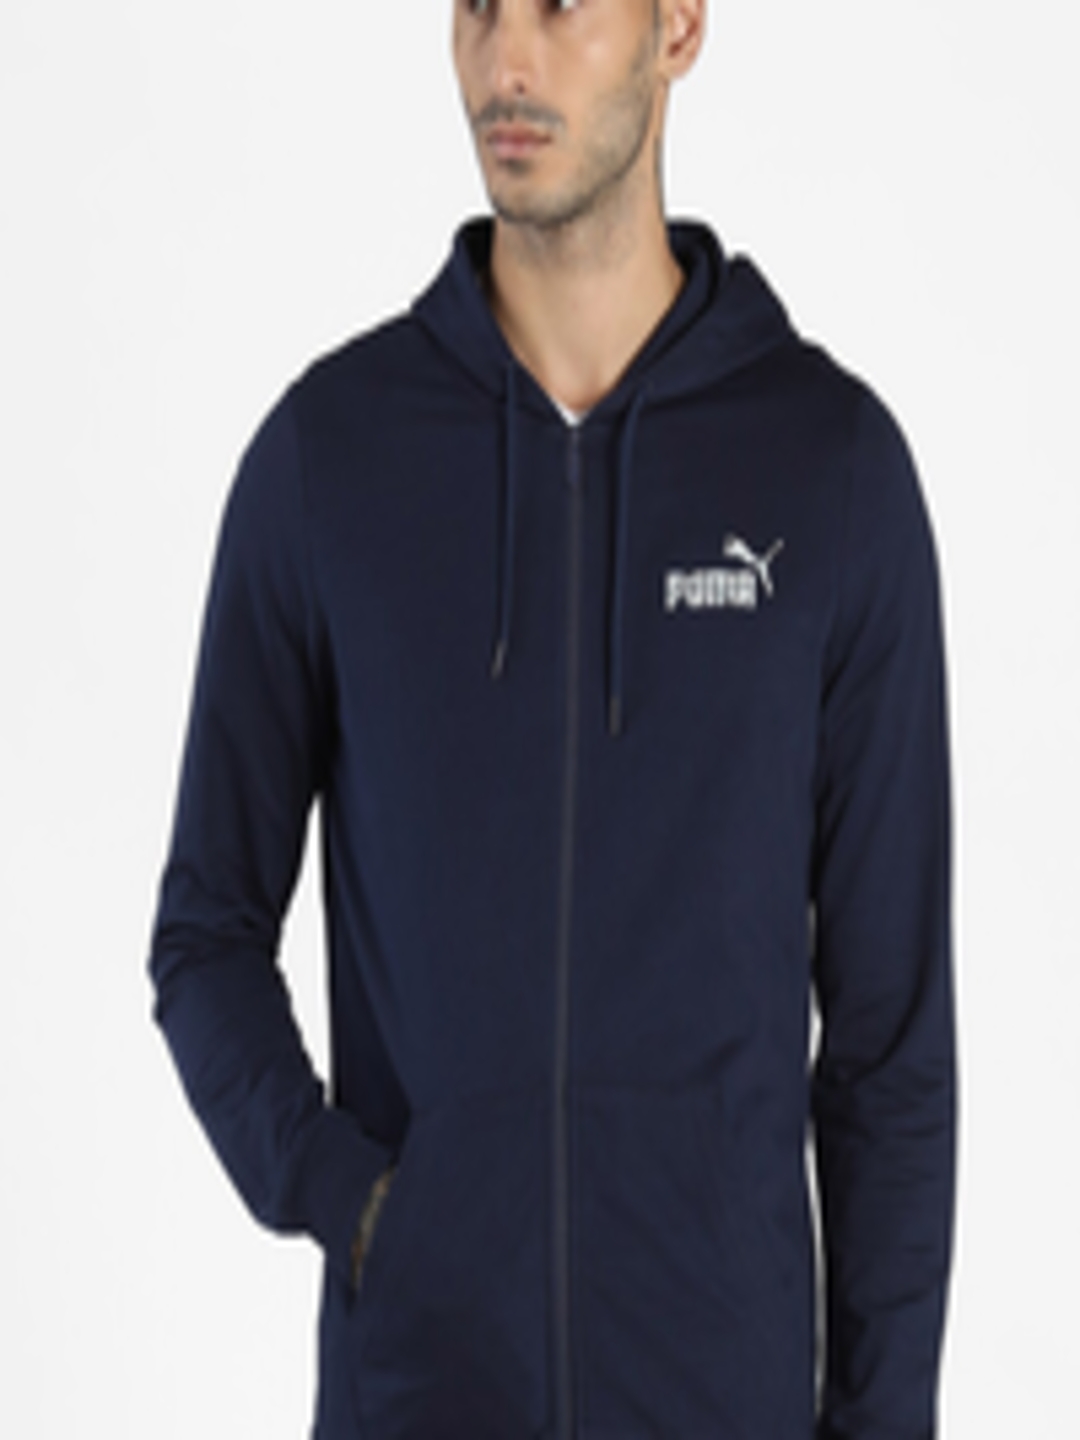 Buy Puma Men Blue Graphic Hoody Jacket - Jackets for Men 15684110 | Myntra